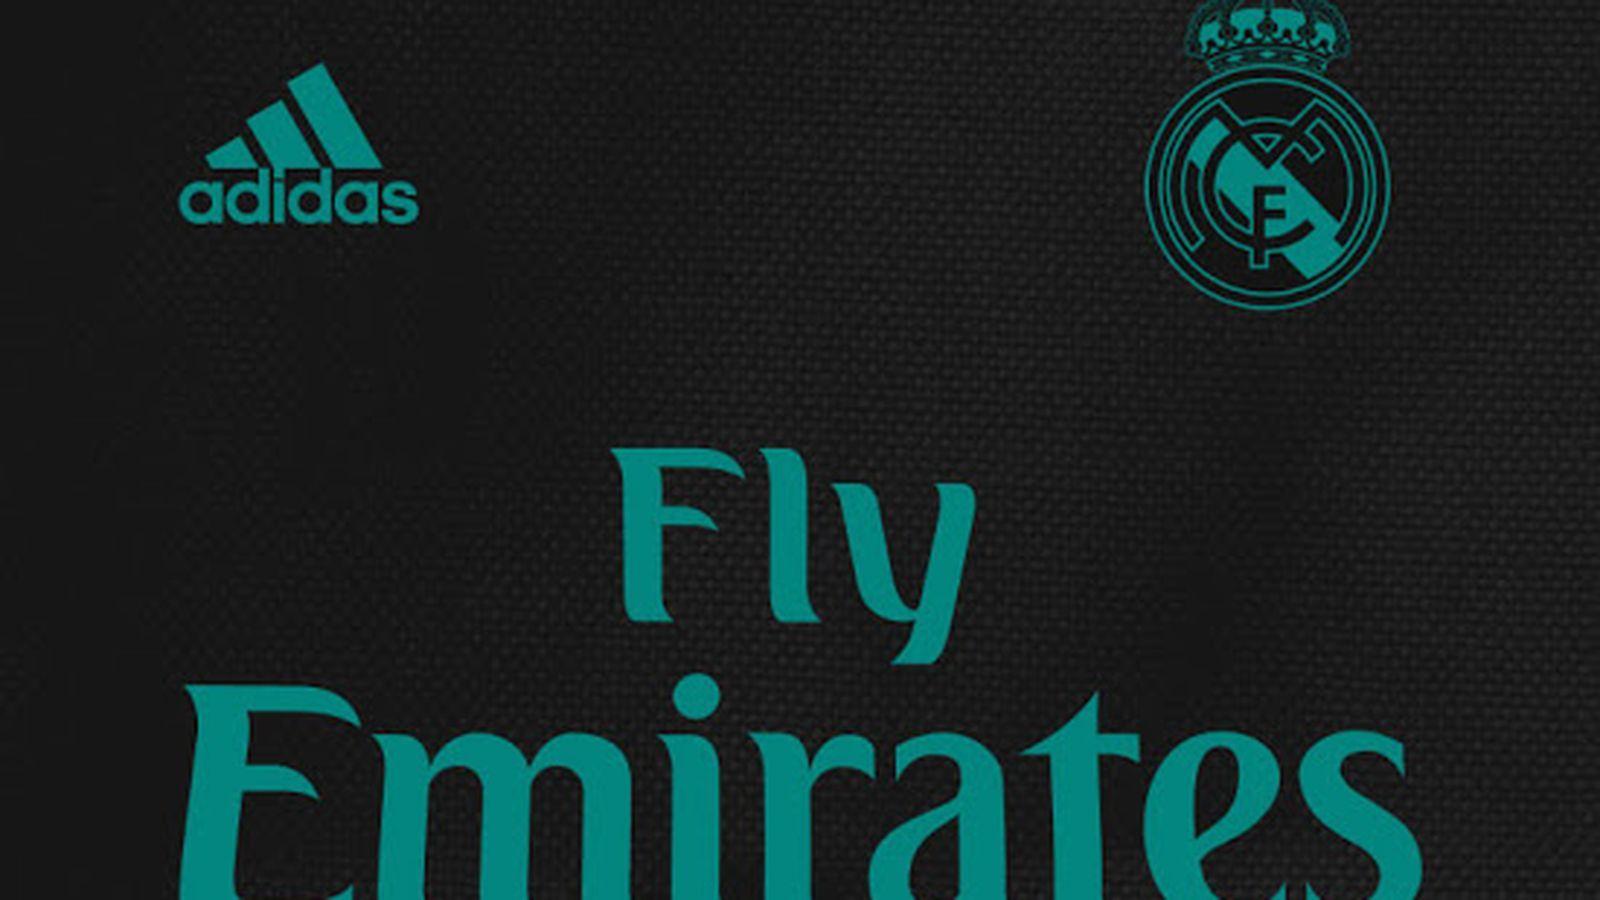 Adidas Real Madrid Logo - Real Madrid's 2017 2018 Away Kit Leaked?